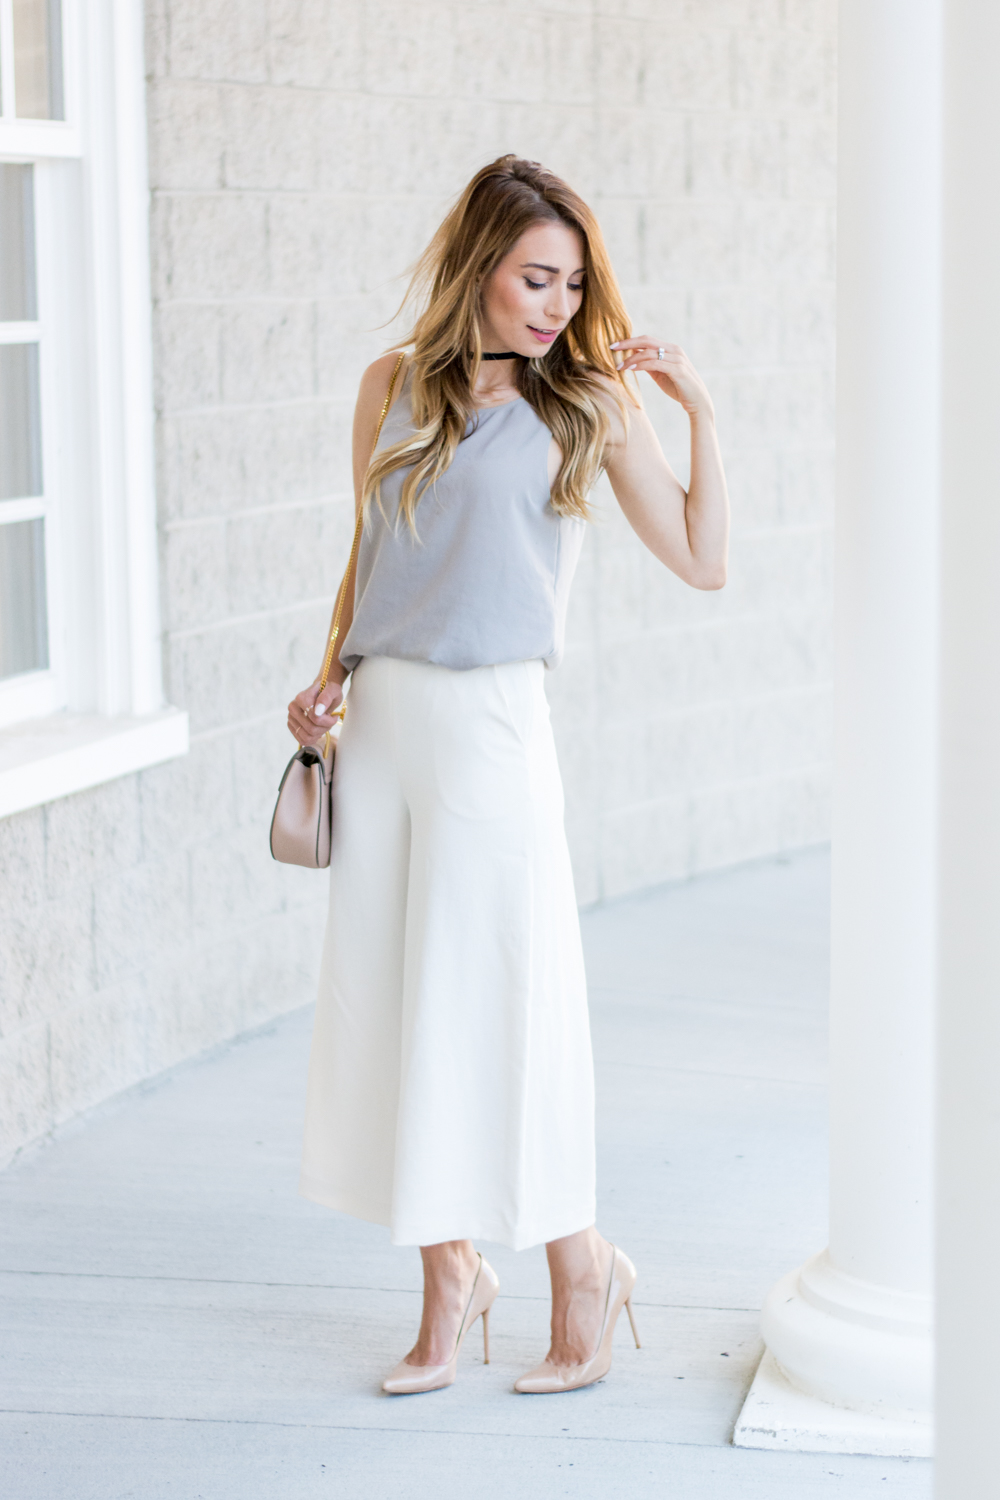 OOTD - Aritzia White Culottes | La Noob | A Toronto-Based Fashion and Lifestyle Blog.